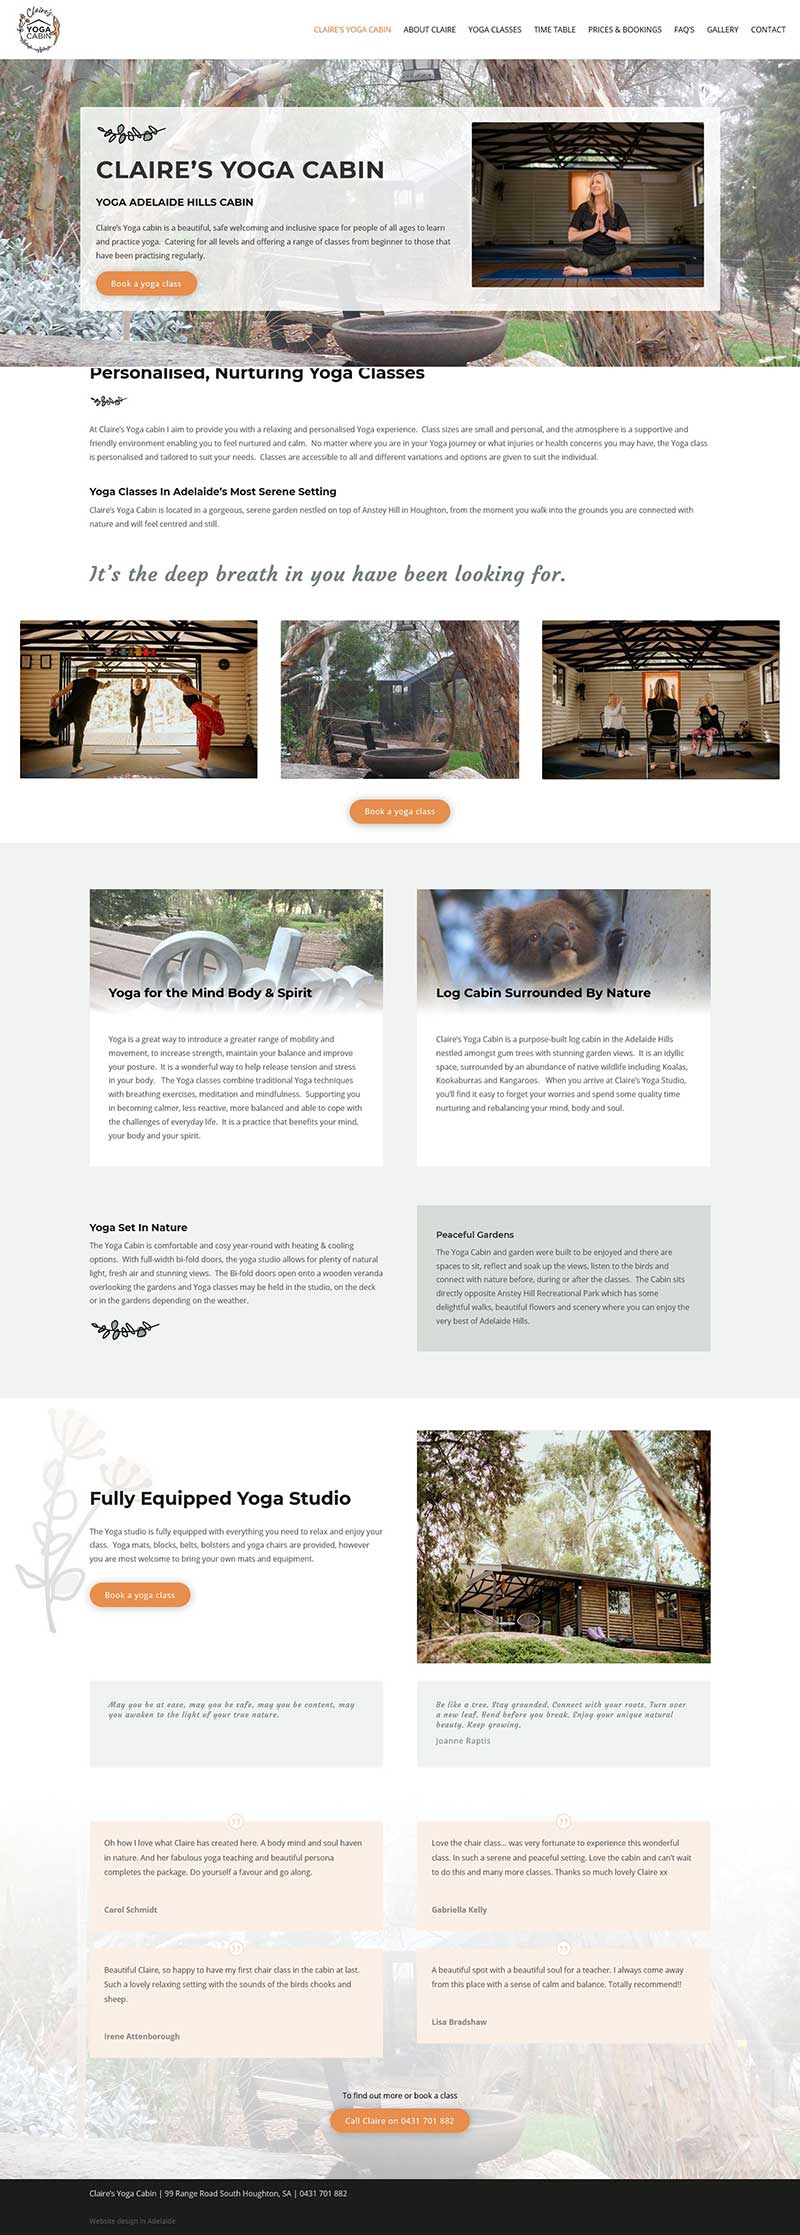 website design for a yoga studio in adelaide hills